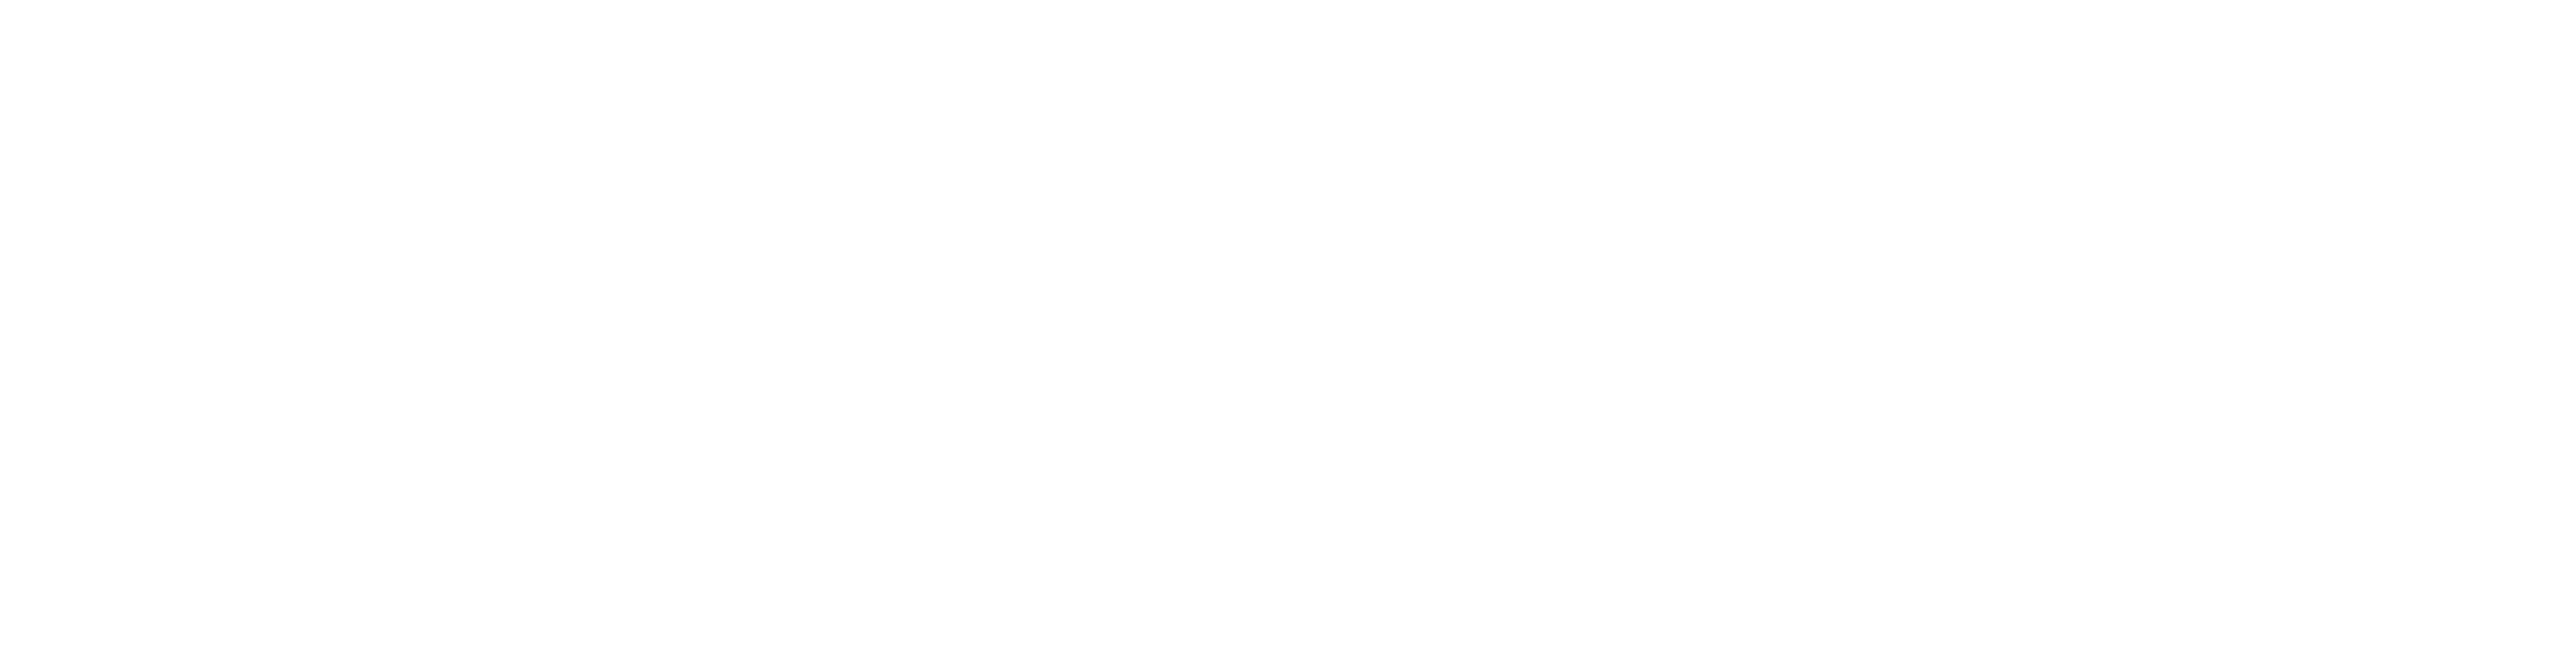 CyFoundry